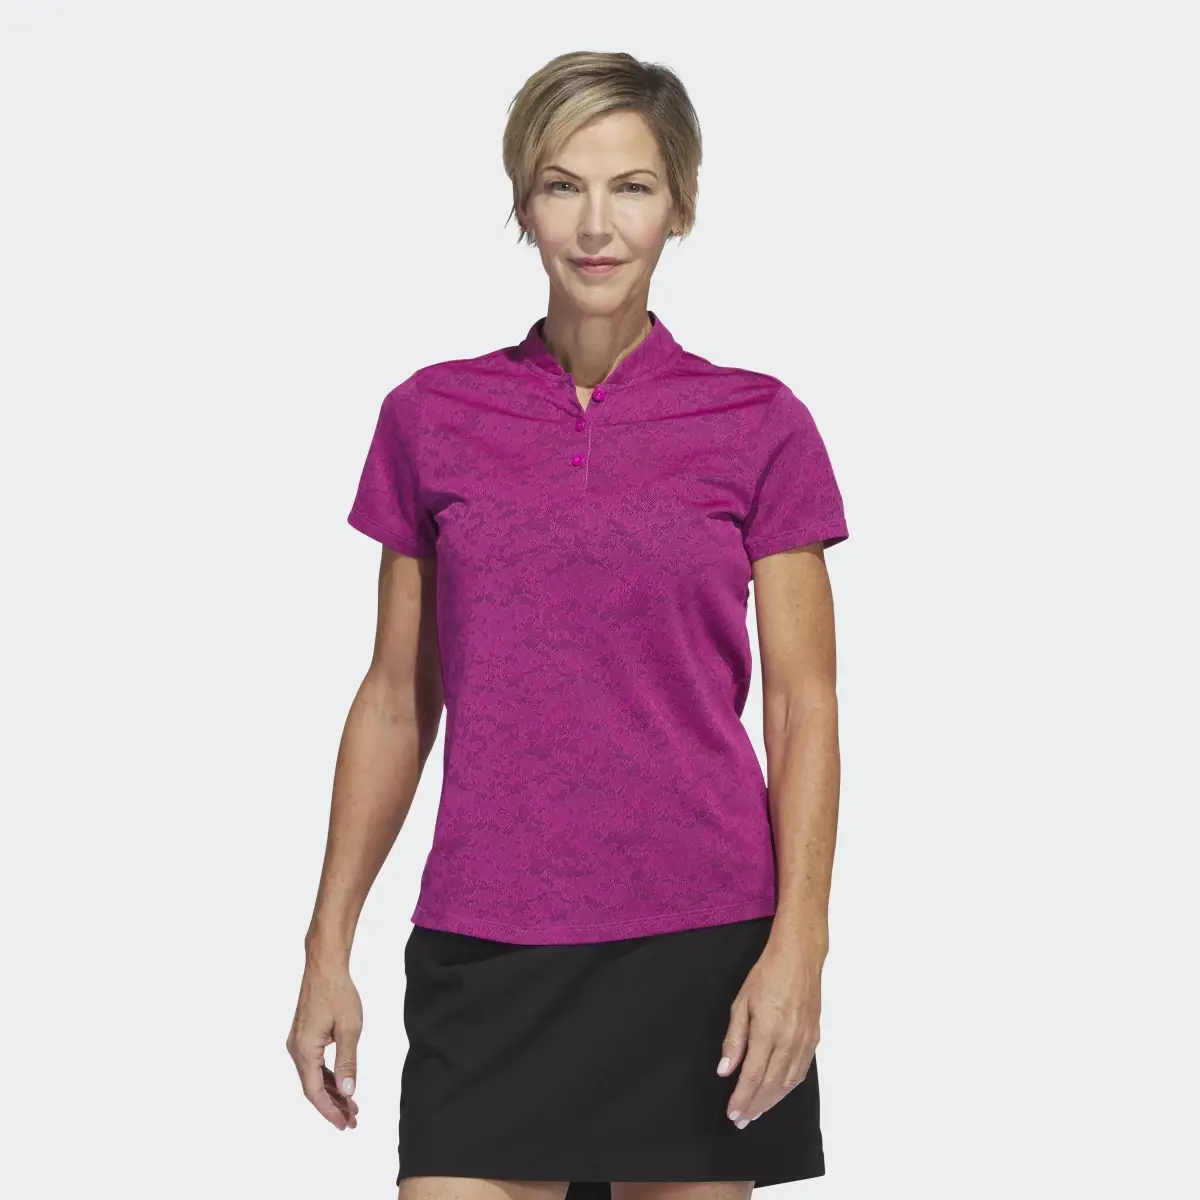 Adidas Jacquard Golf Polo Shirt. 2